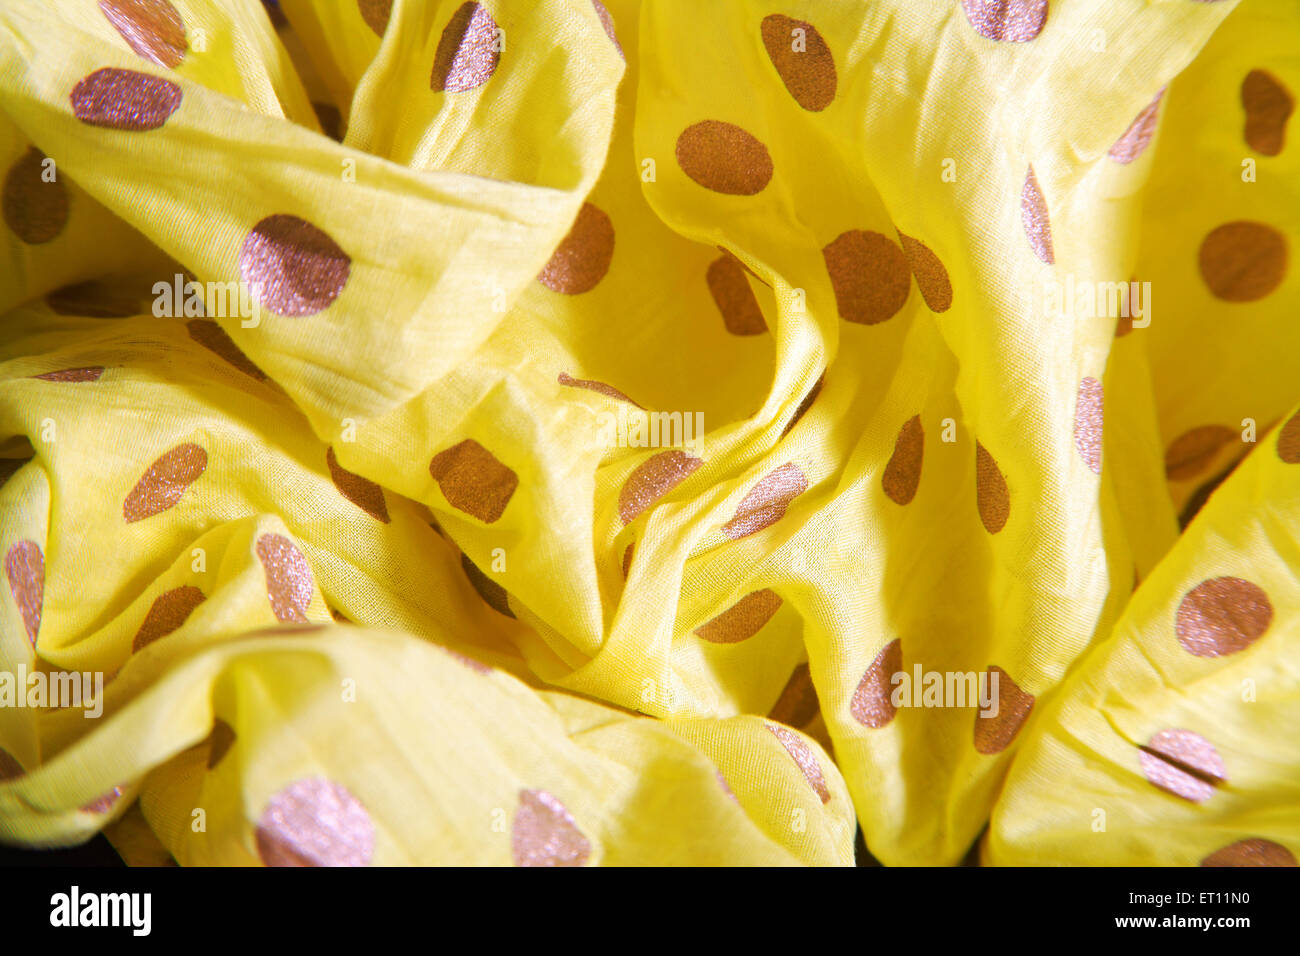 Cotton fabric sari with golden dots Stock Photo